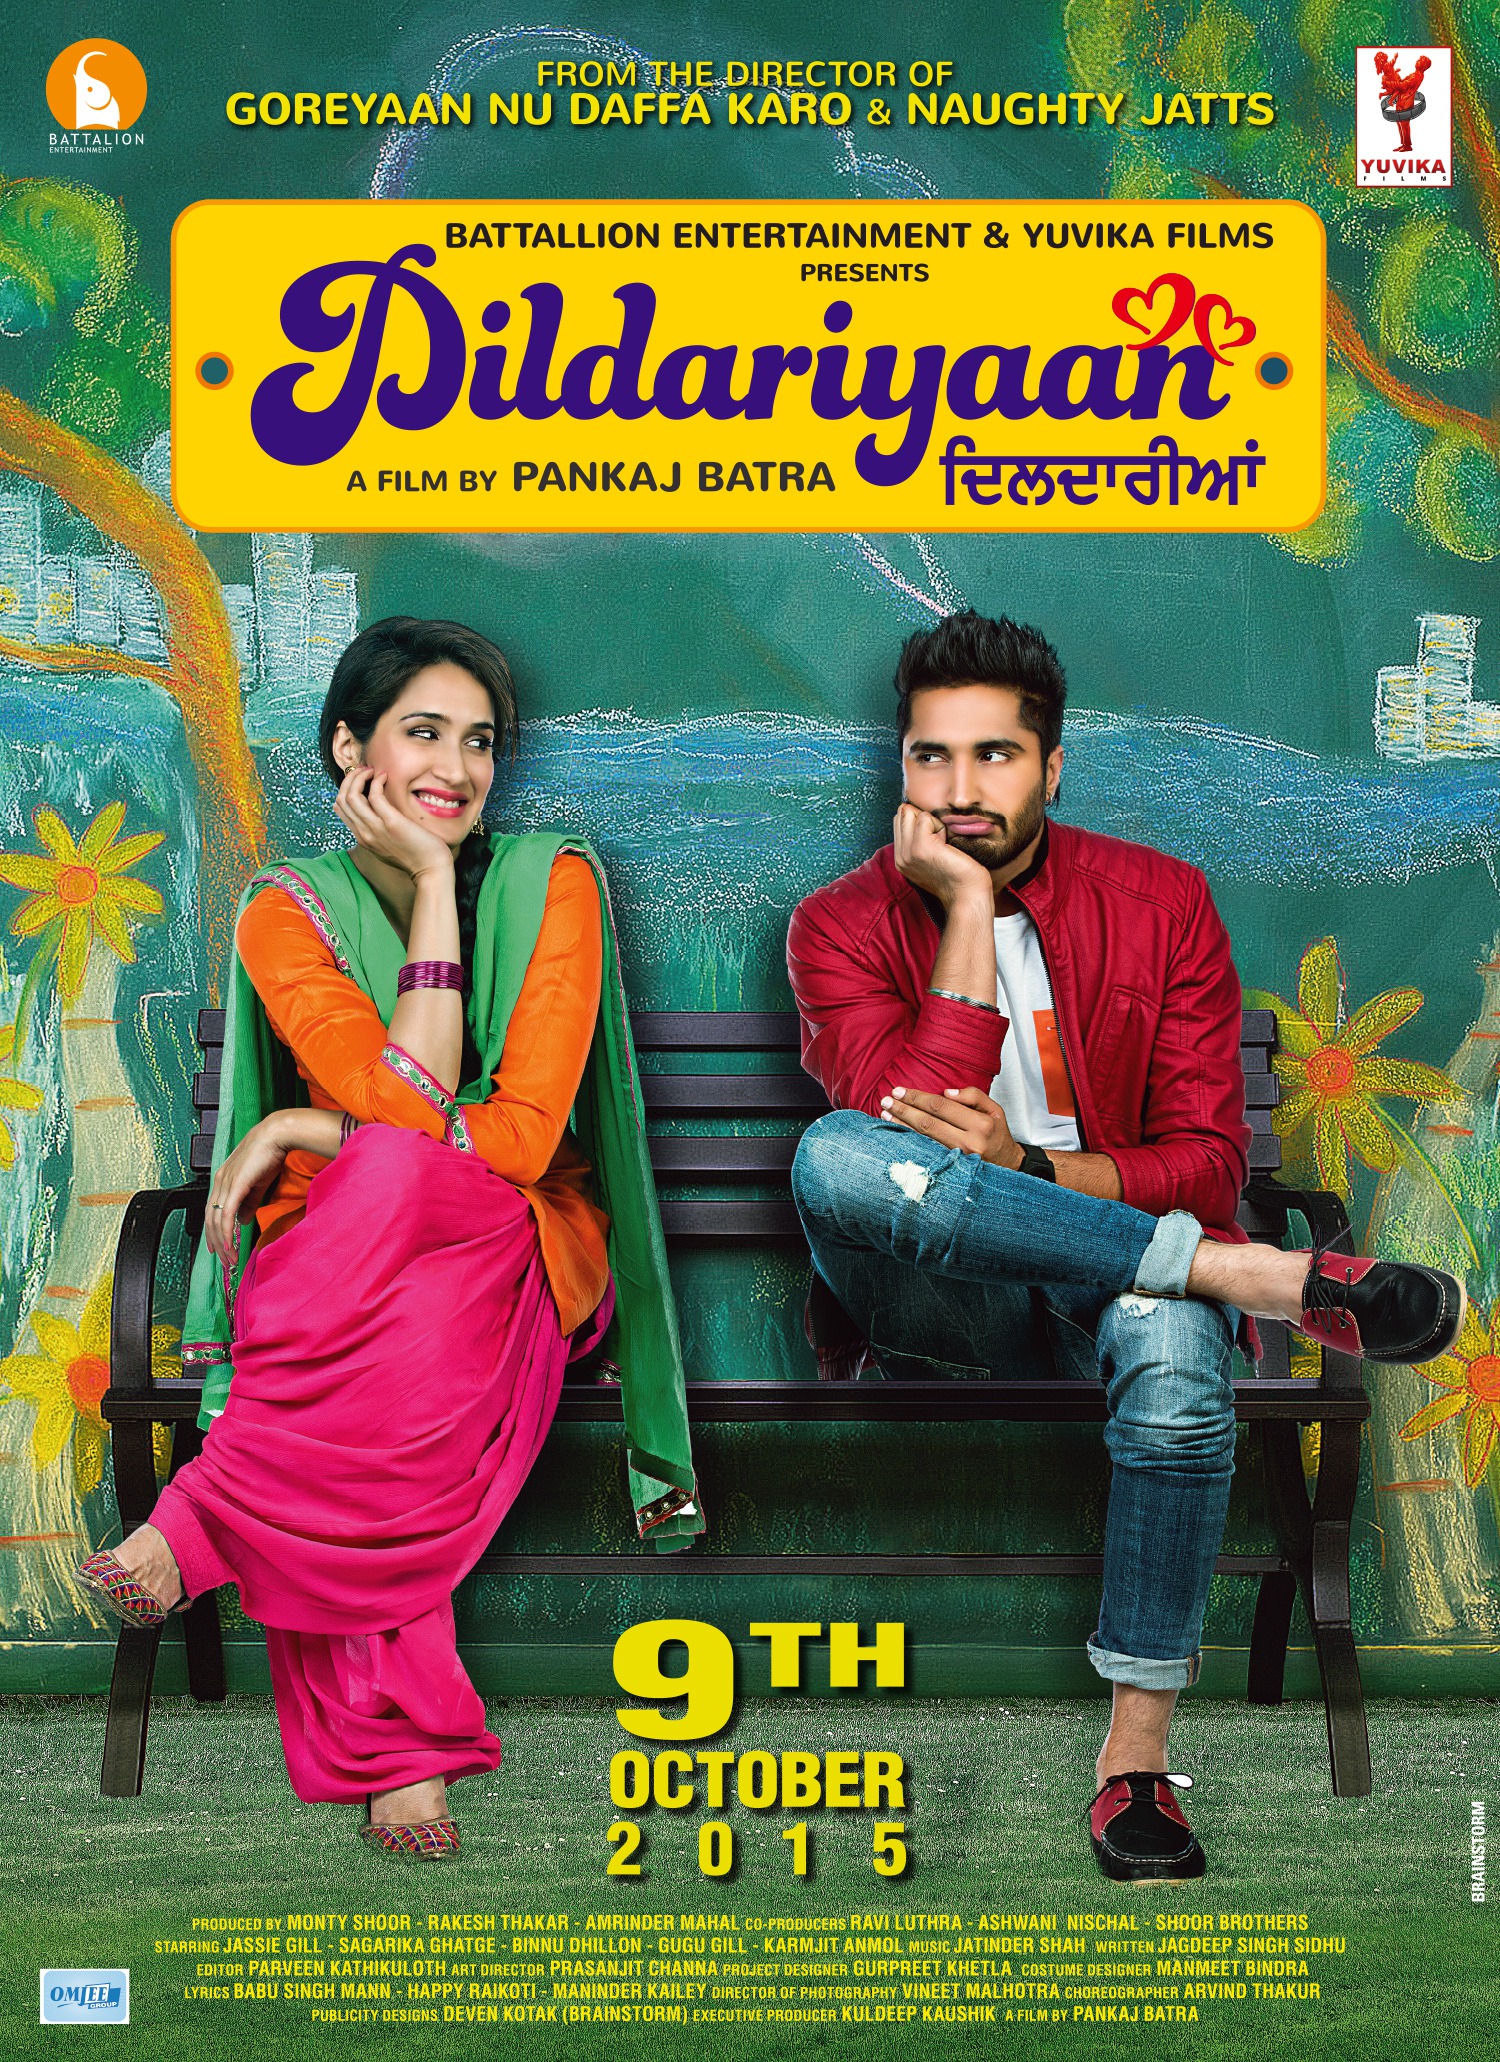 Mega Sized Movie Poster Image for Dildariyaan (#2 of 4)